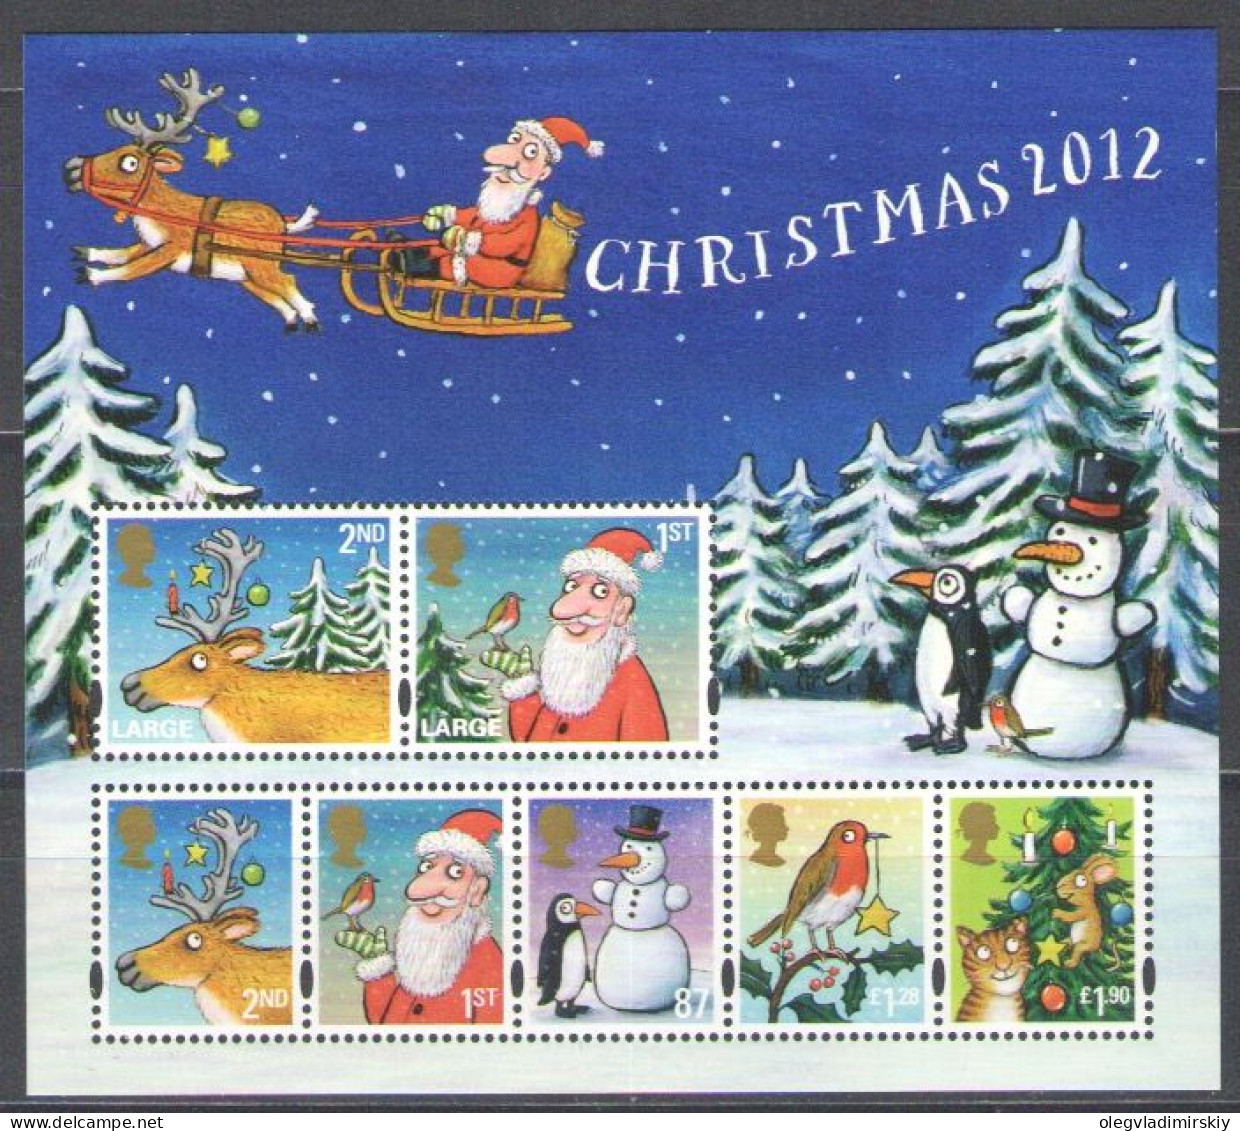 Great Britain United Kingdom 2012 Christmas Set Of 7 Classic Stamps In Block MNH - Blocchi & Foglietti